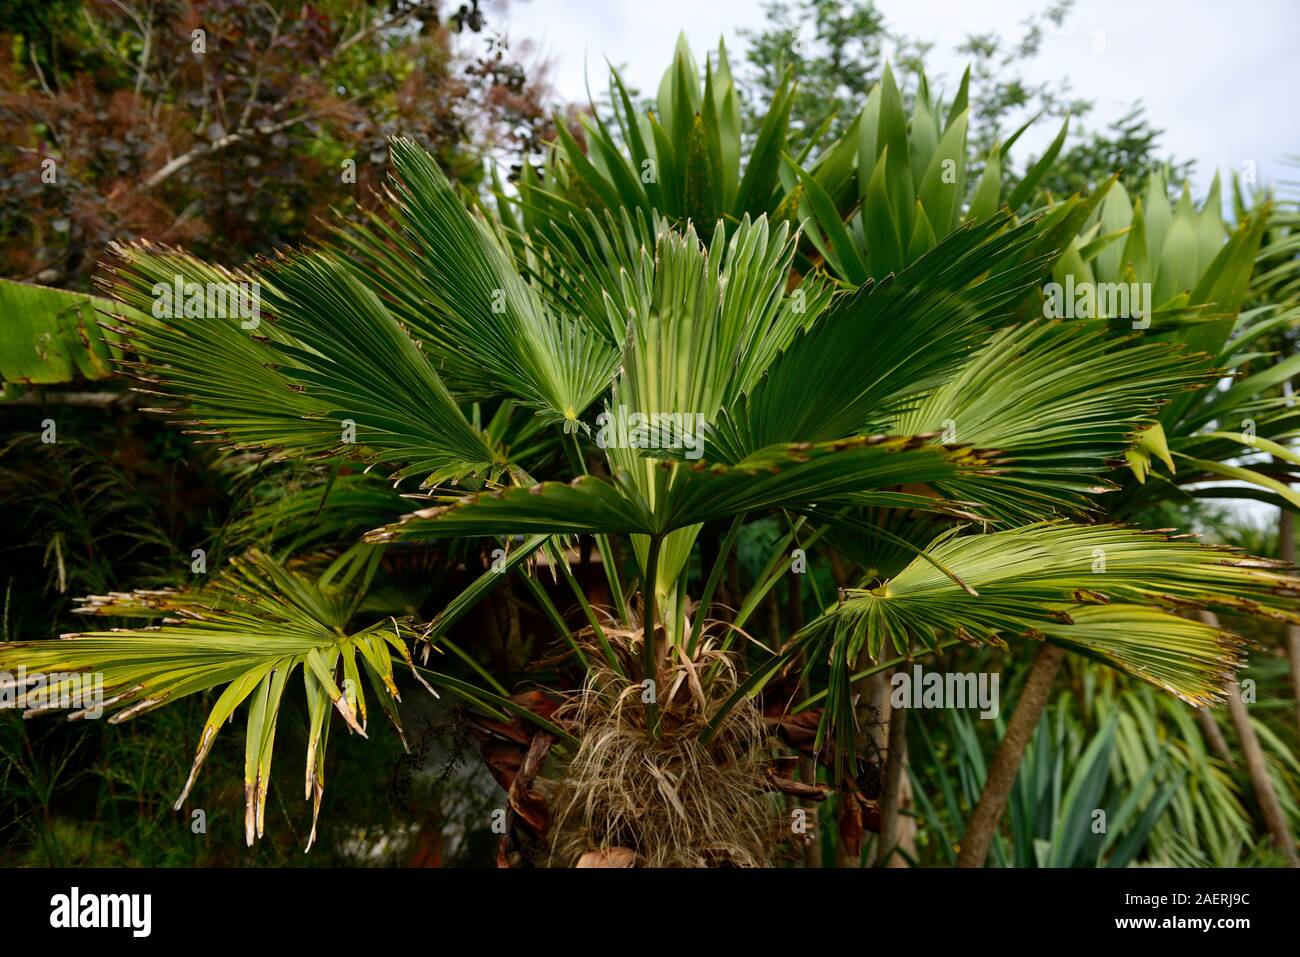 Trachycarpus fortunei Wagnerianus,palm tree,trees,leaves,foliage,garden,gardens,RM Floral Stock Photo